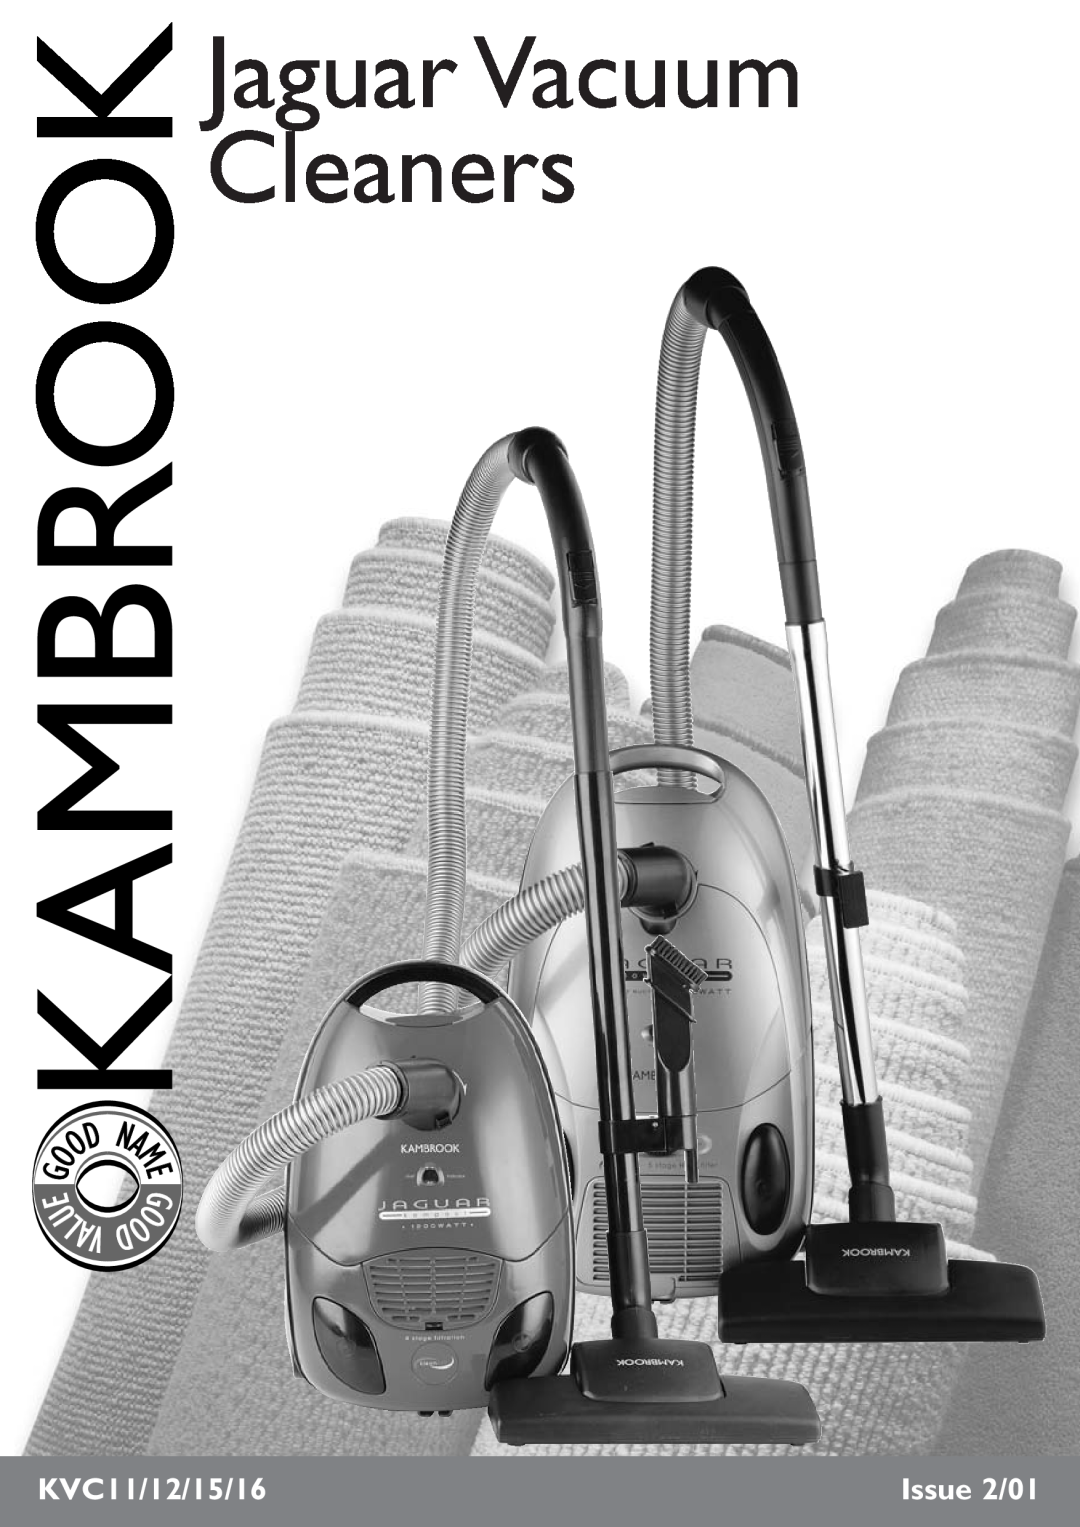 Kambrook KVC12 manual U Lav, Jaguar Vacuum Cleaners, KVC11/12/15/16, Issue 2/01 